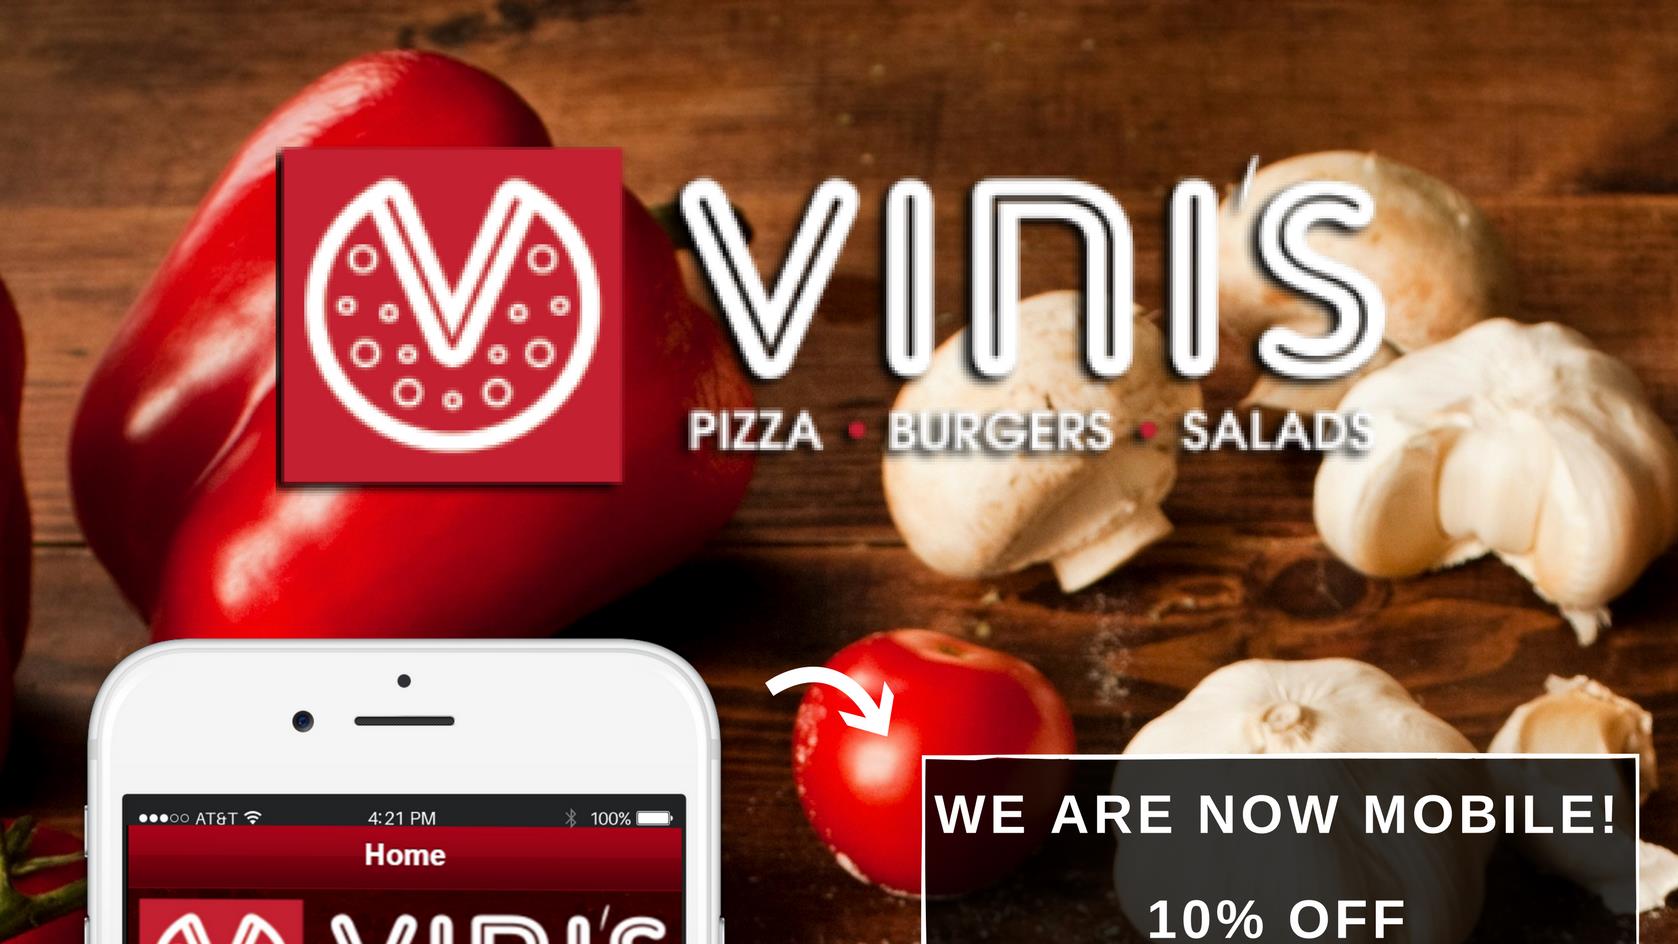 Vini's Pizza/Pizza                                                                                                                                                                                                   